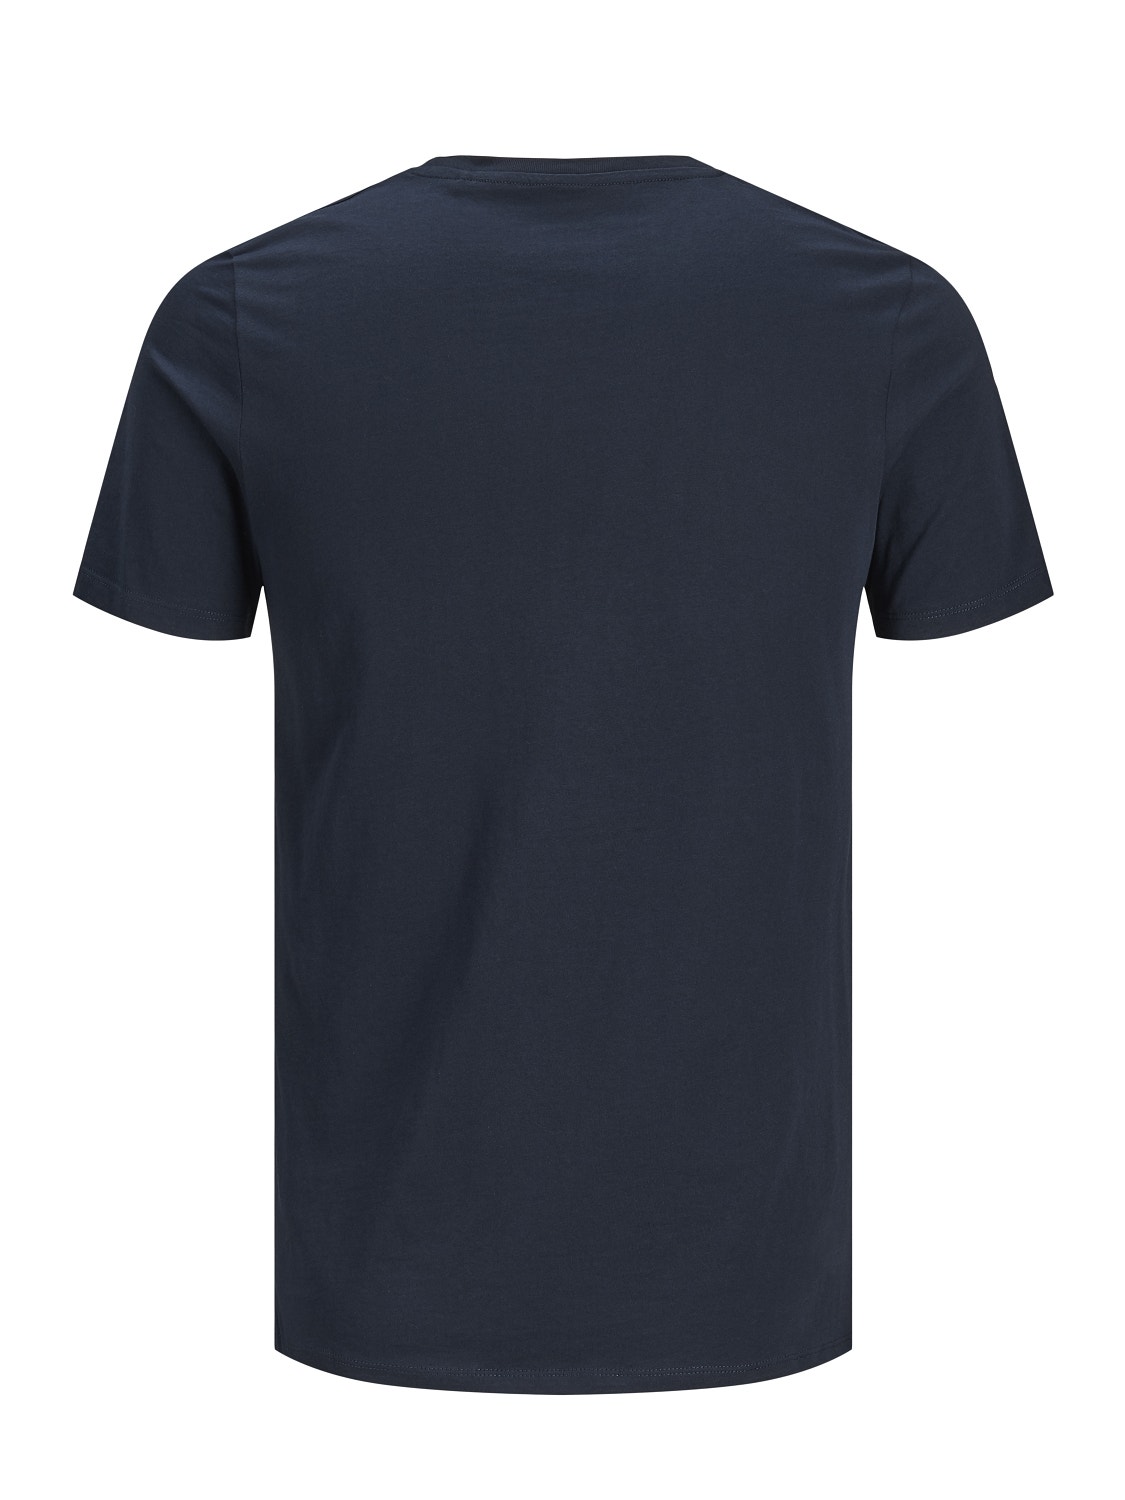 Jack & Jones T-shirt Con logo Girocollo -Navy Blazer - 12151955